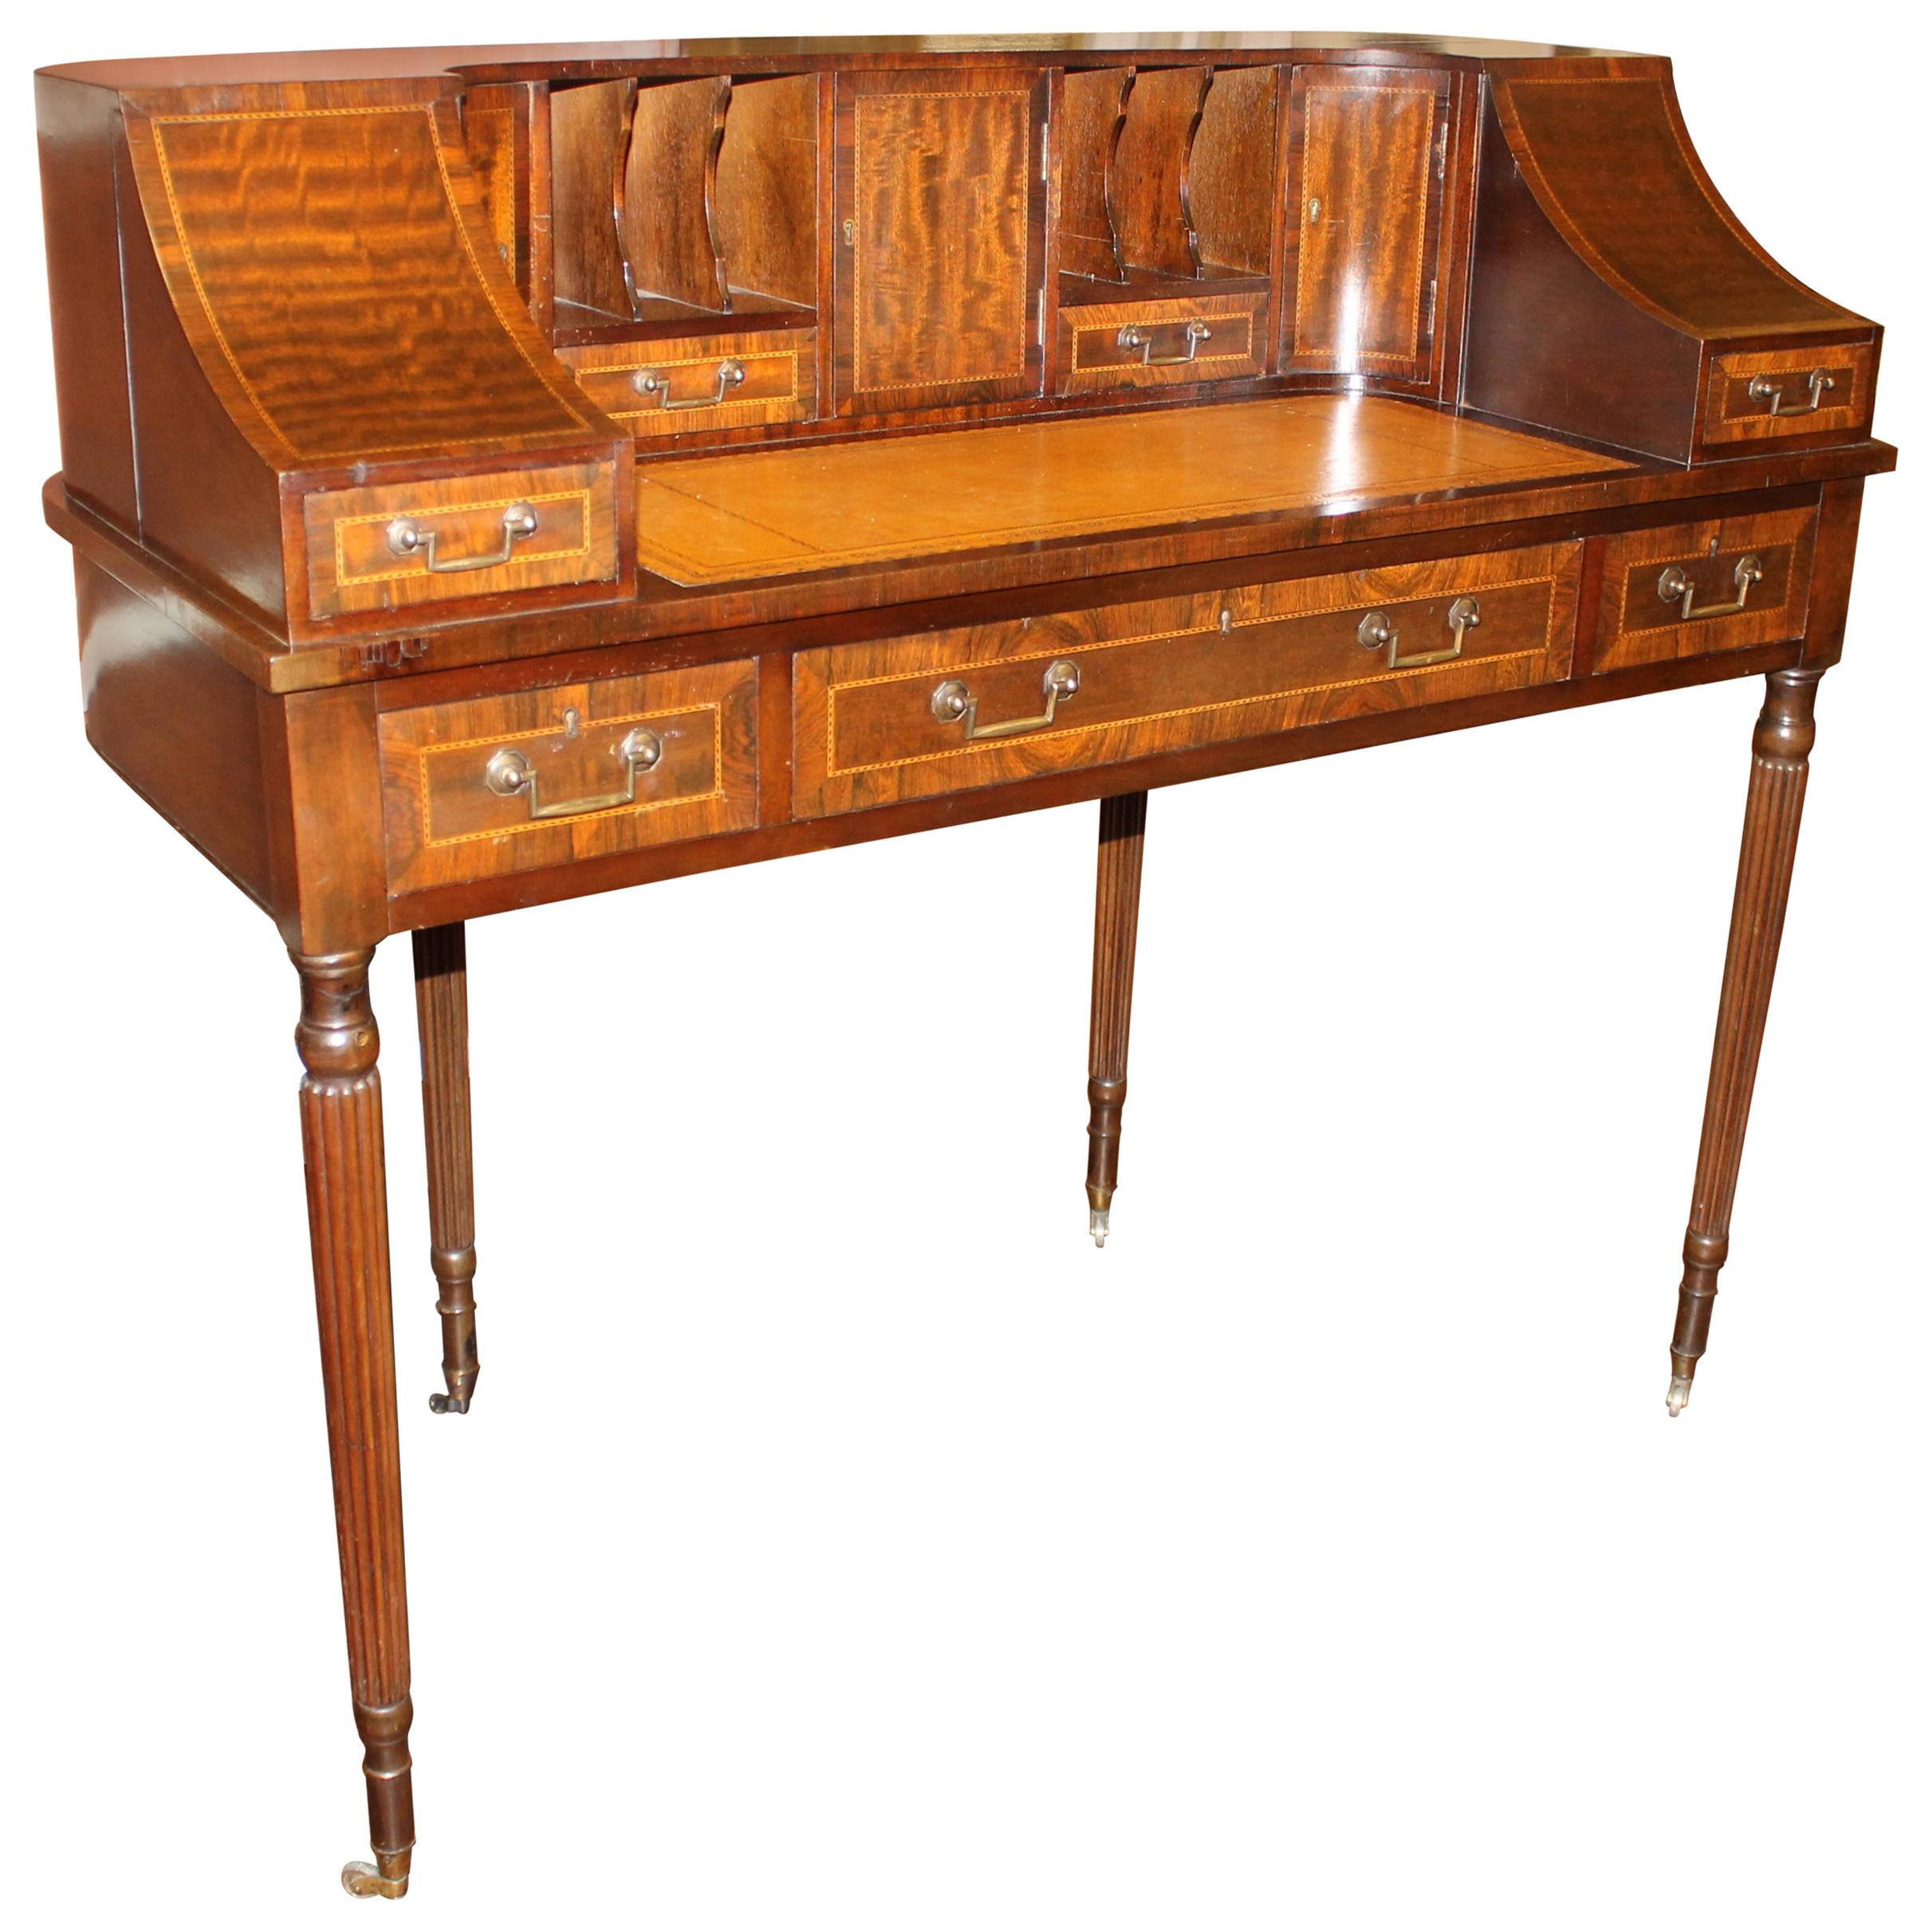 Rare Old English Inlaid Mahogany Leather Top Carlton House Style Desk